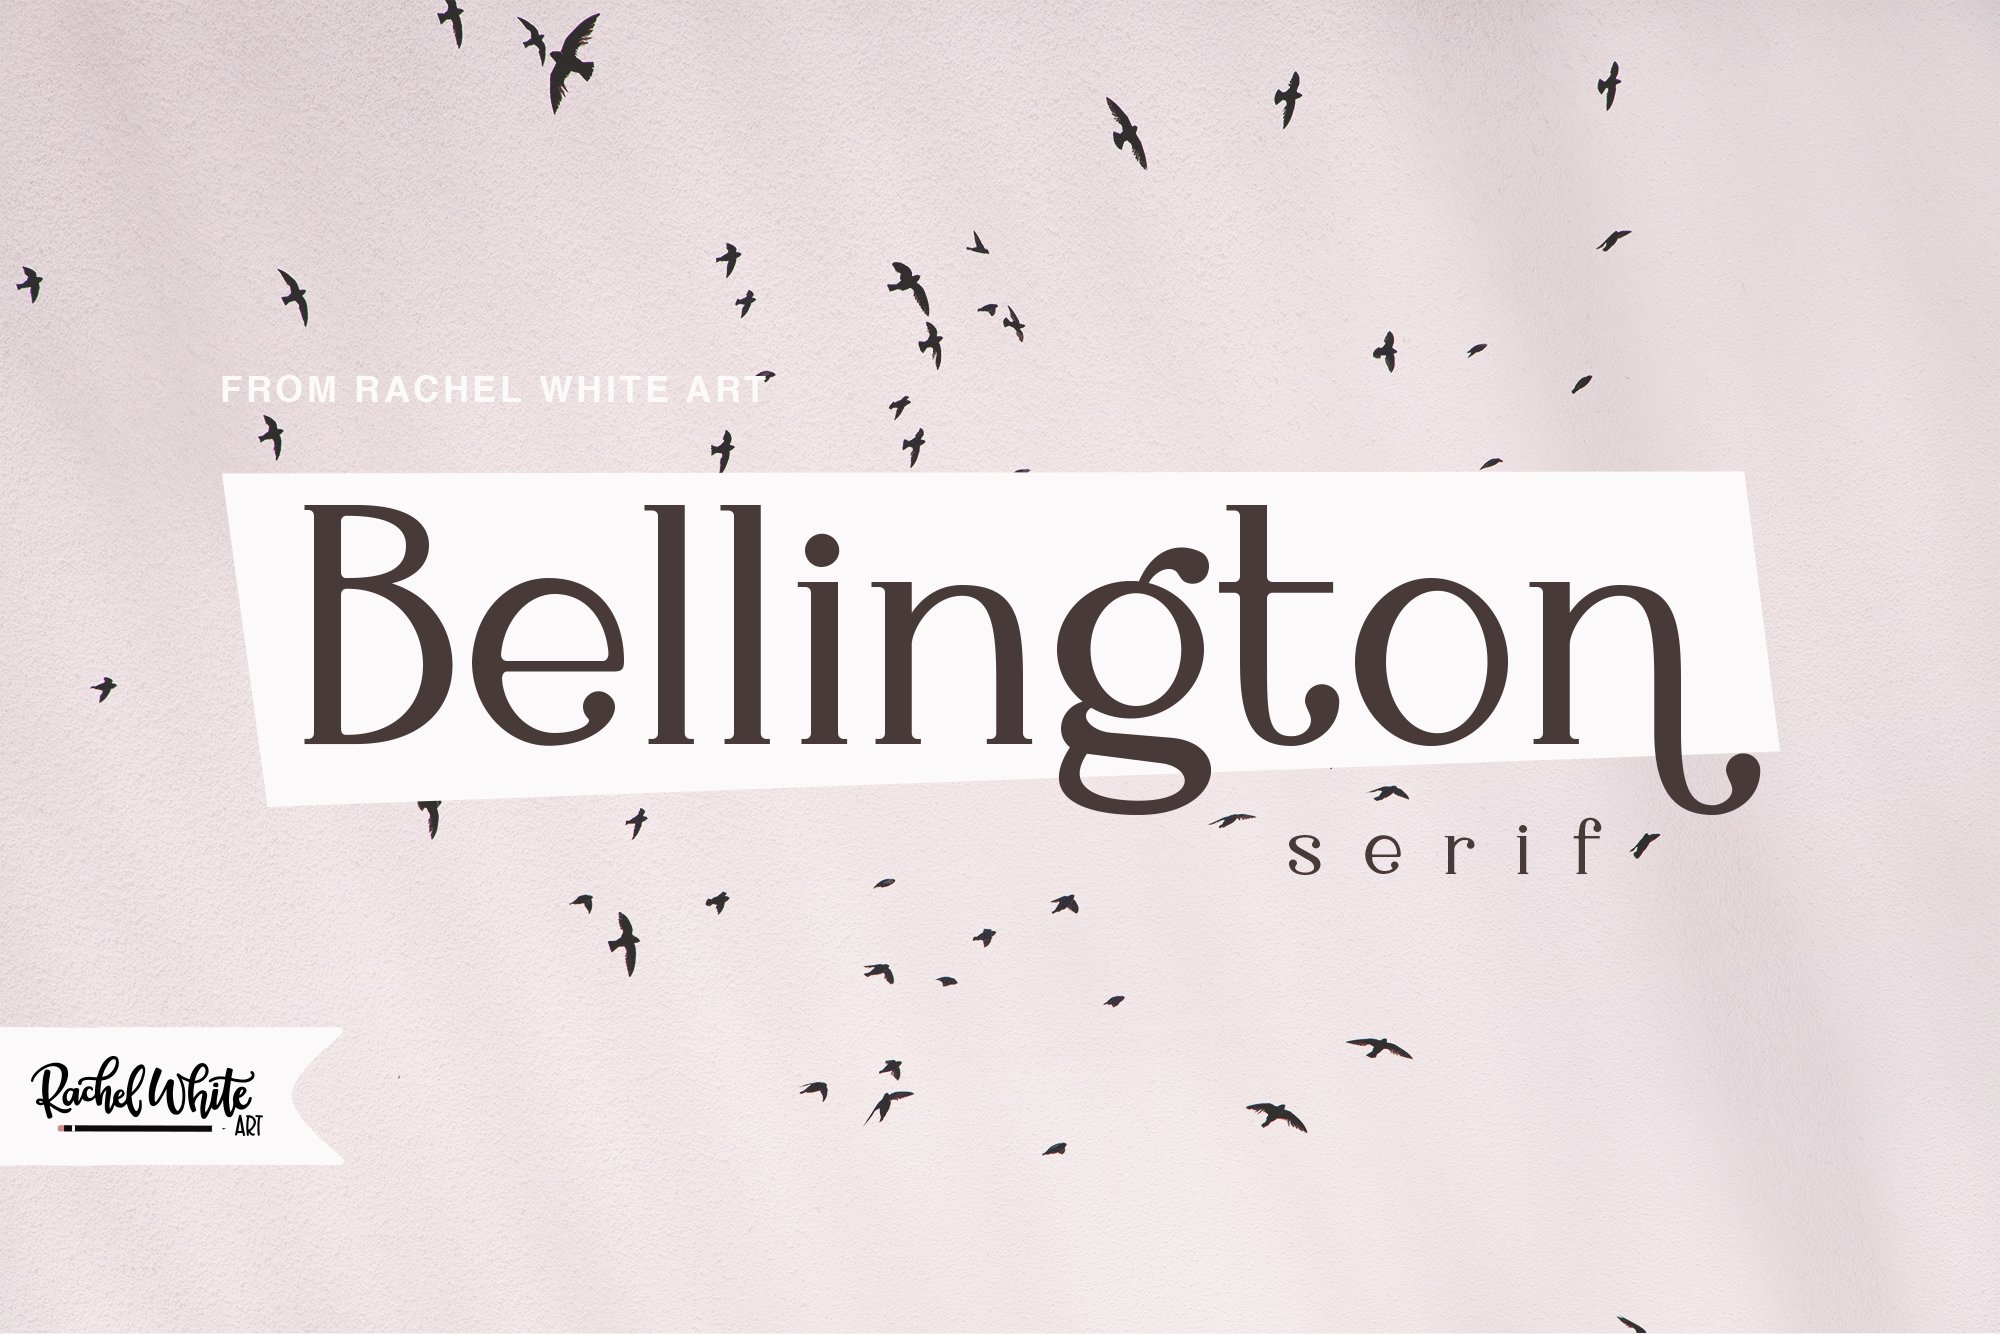 Bellington, a charming serif font cover image.